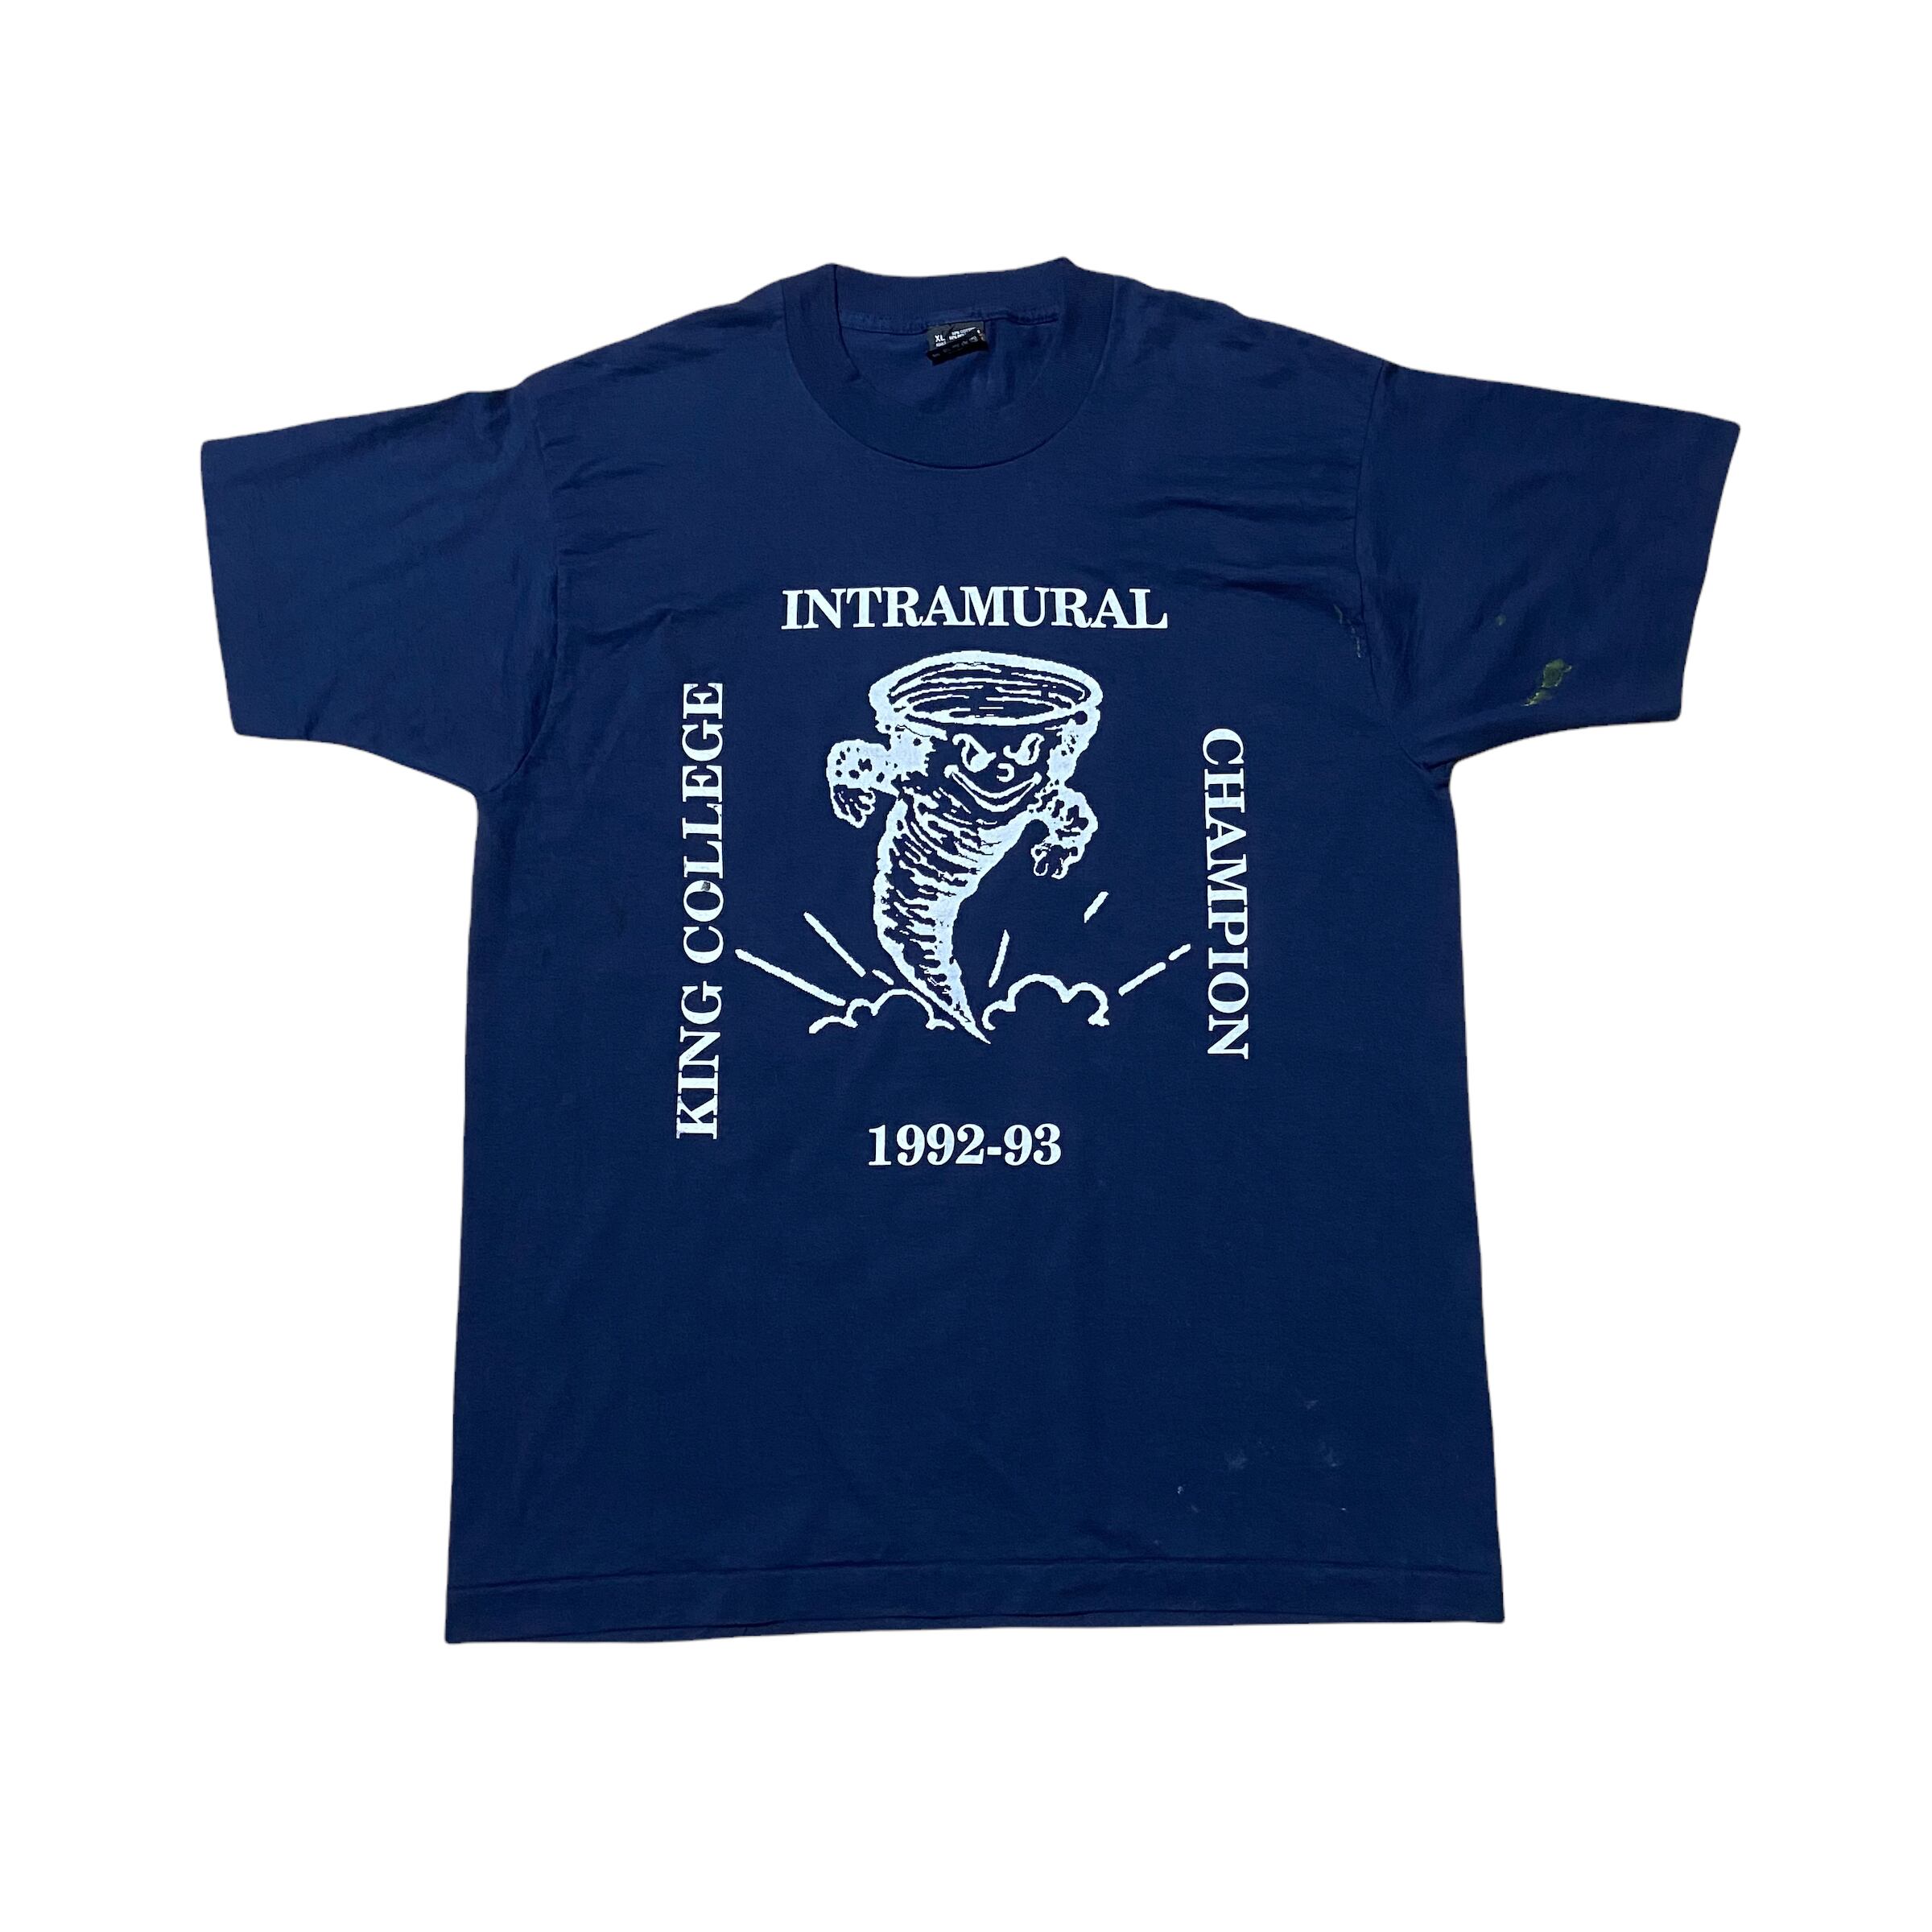 king-s-college-intramural-design-print-t-shirts-f-s-market